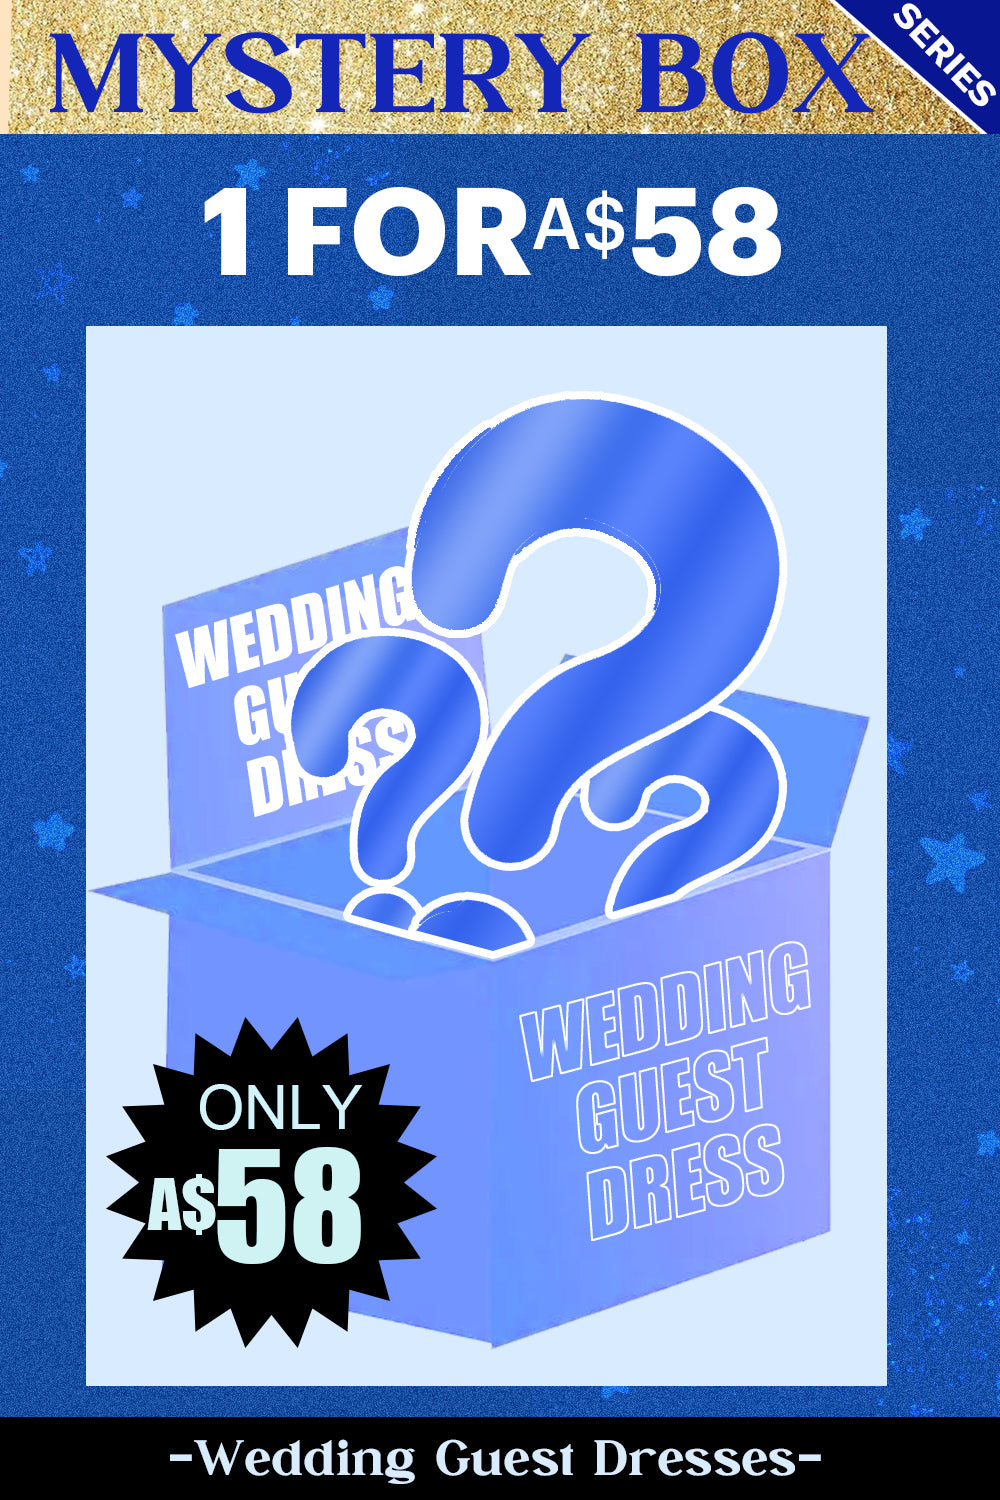 ZAPAKA MYSTERY BOX of 1Pc Wedding Guest Dress